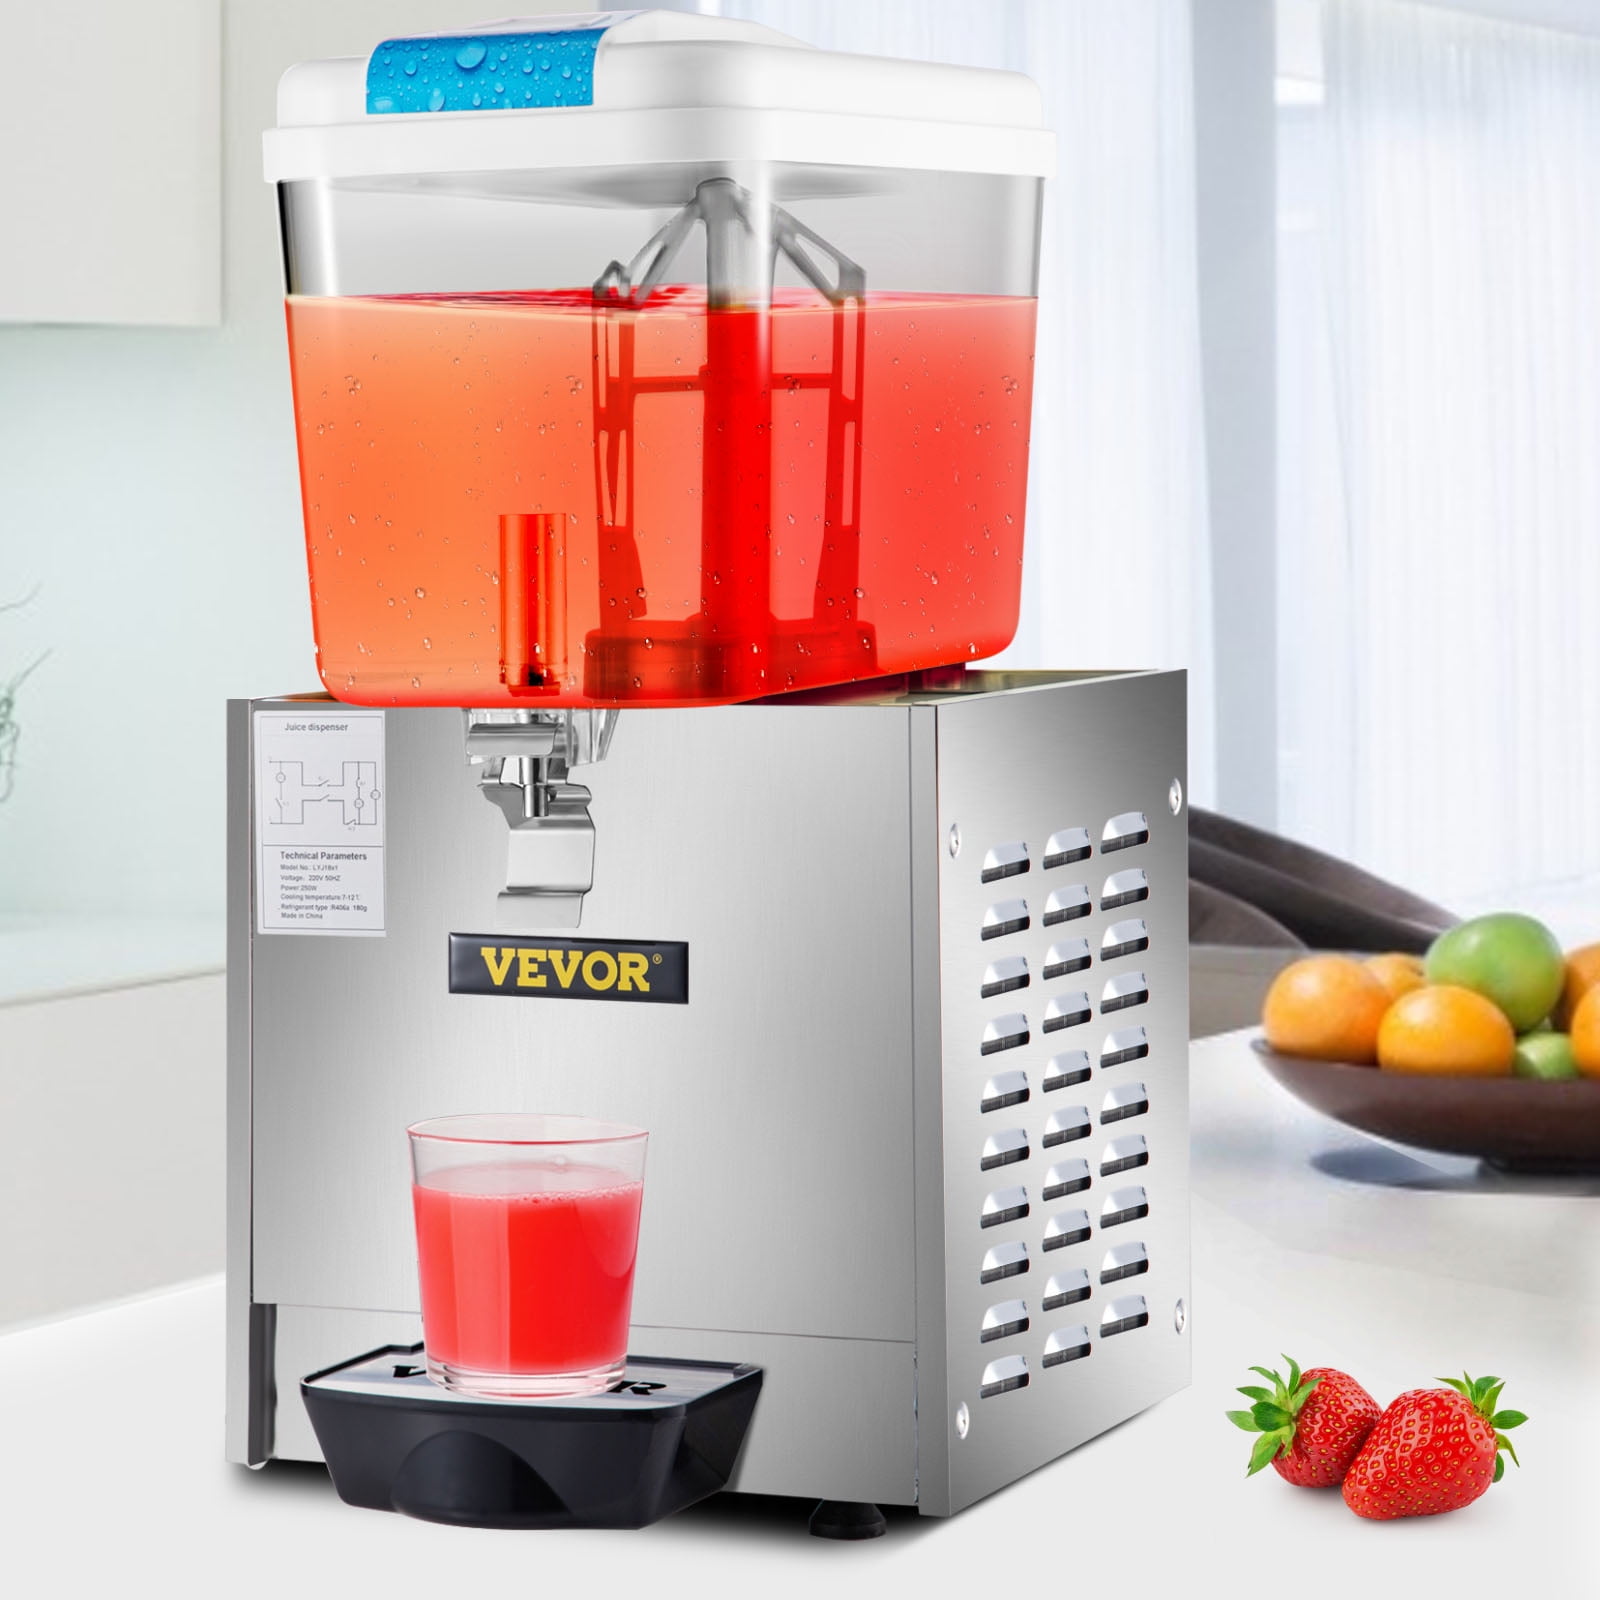 VEVOR Commercial Beverage Dispenser 4.8 Gal. 18L 1 Tanks Drink Dispenser  200W Stainless Steel Juice Dispenser, 110V YLJHSLYJ18LX1DG01V1 - The Home  Depot